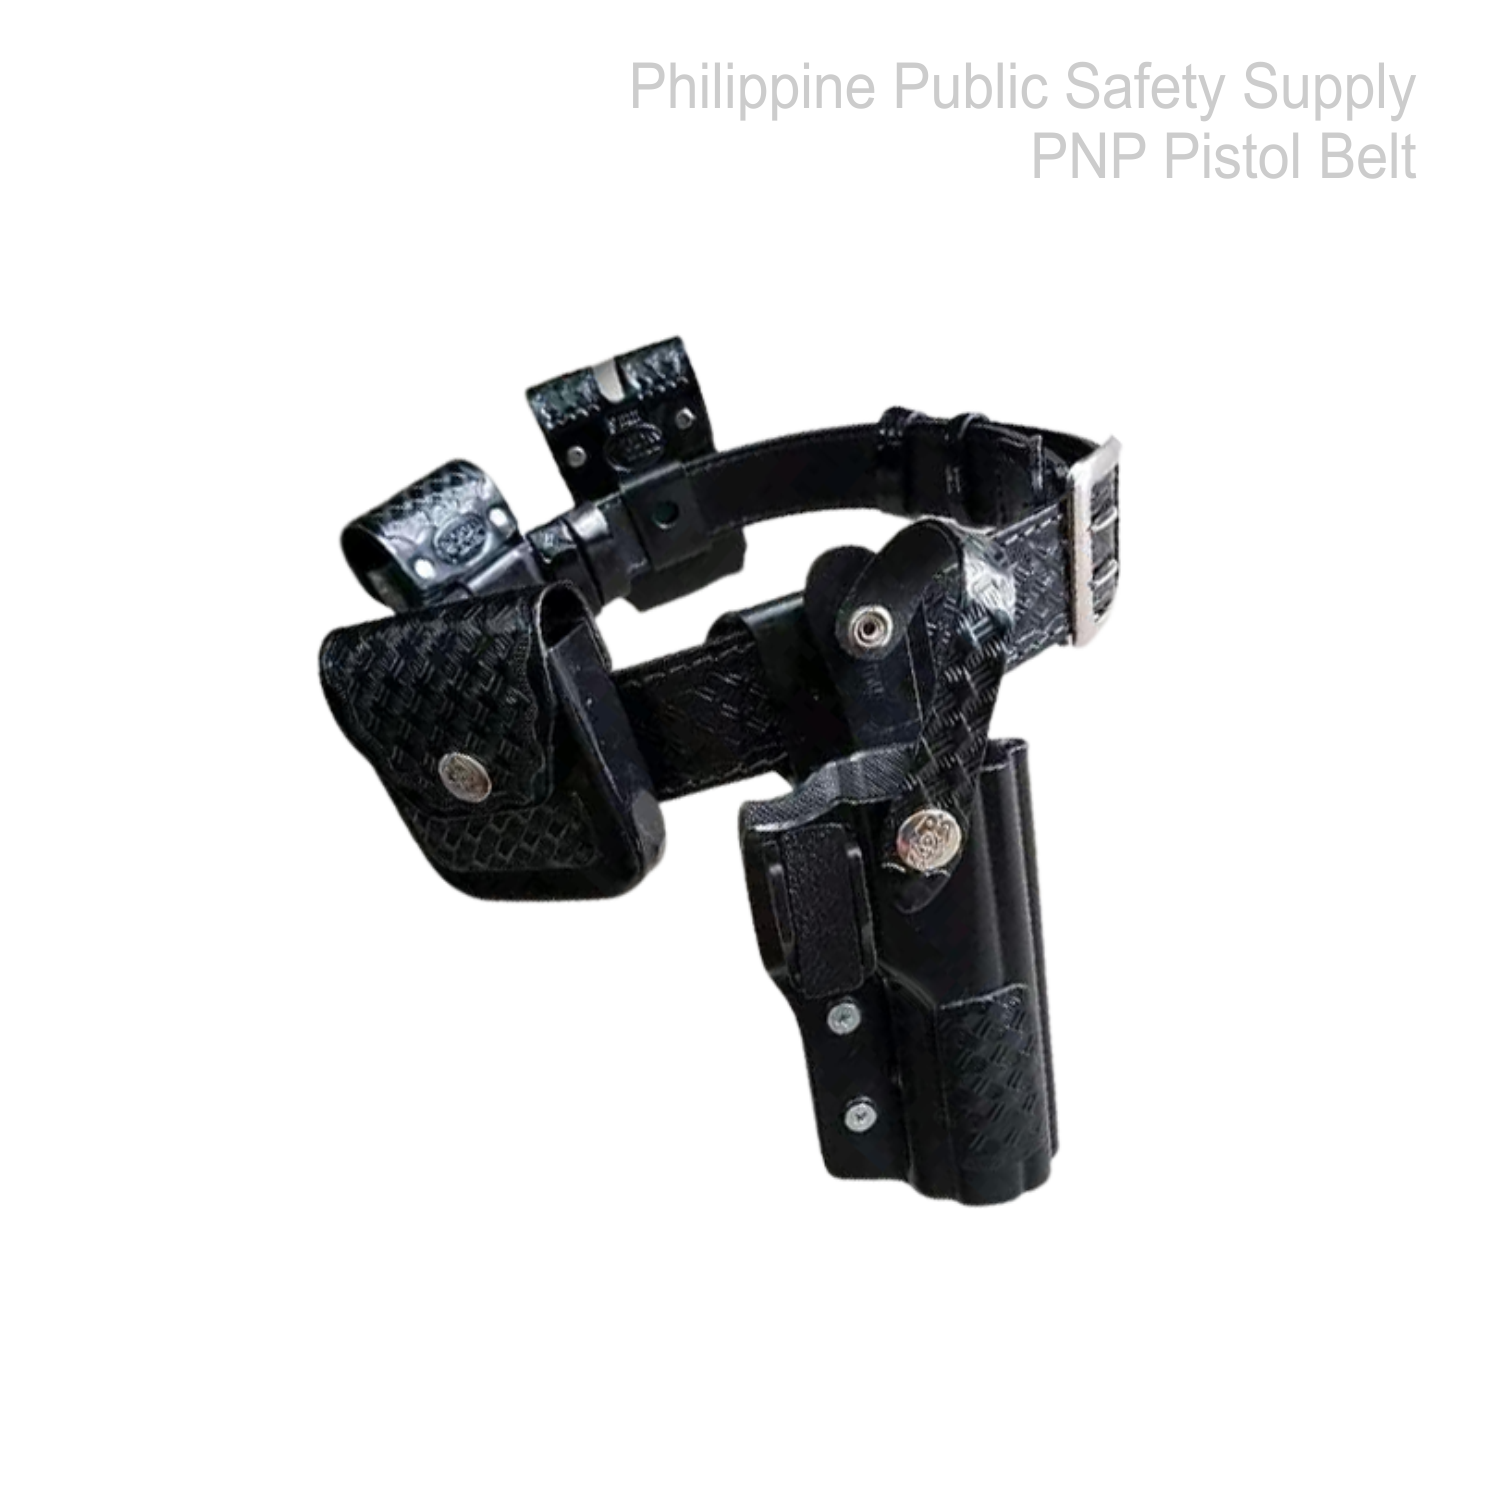 Philippine National Police (PNP) Pistol Belt - PNP